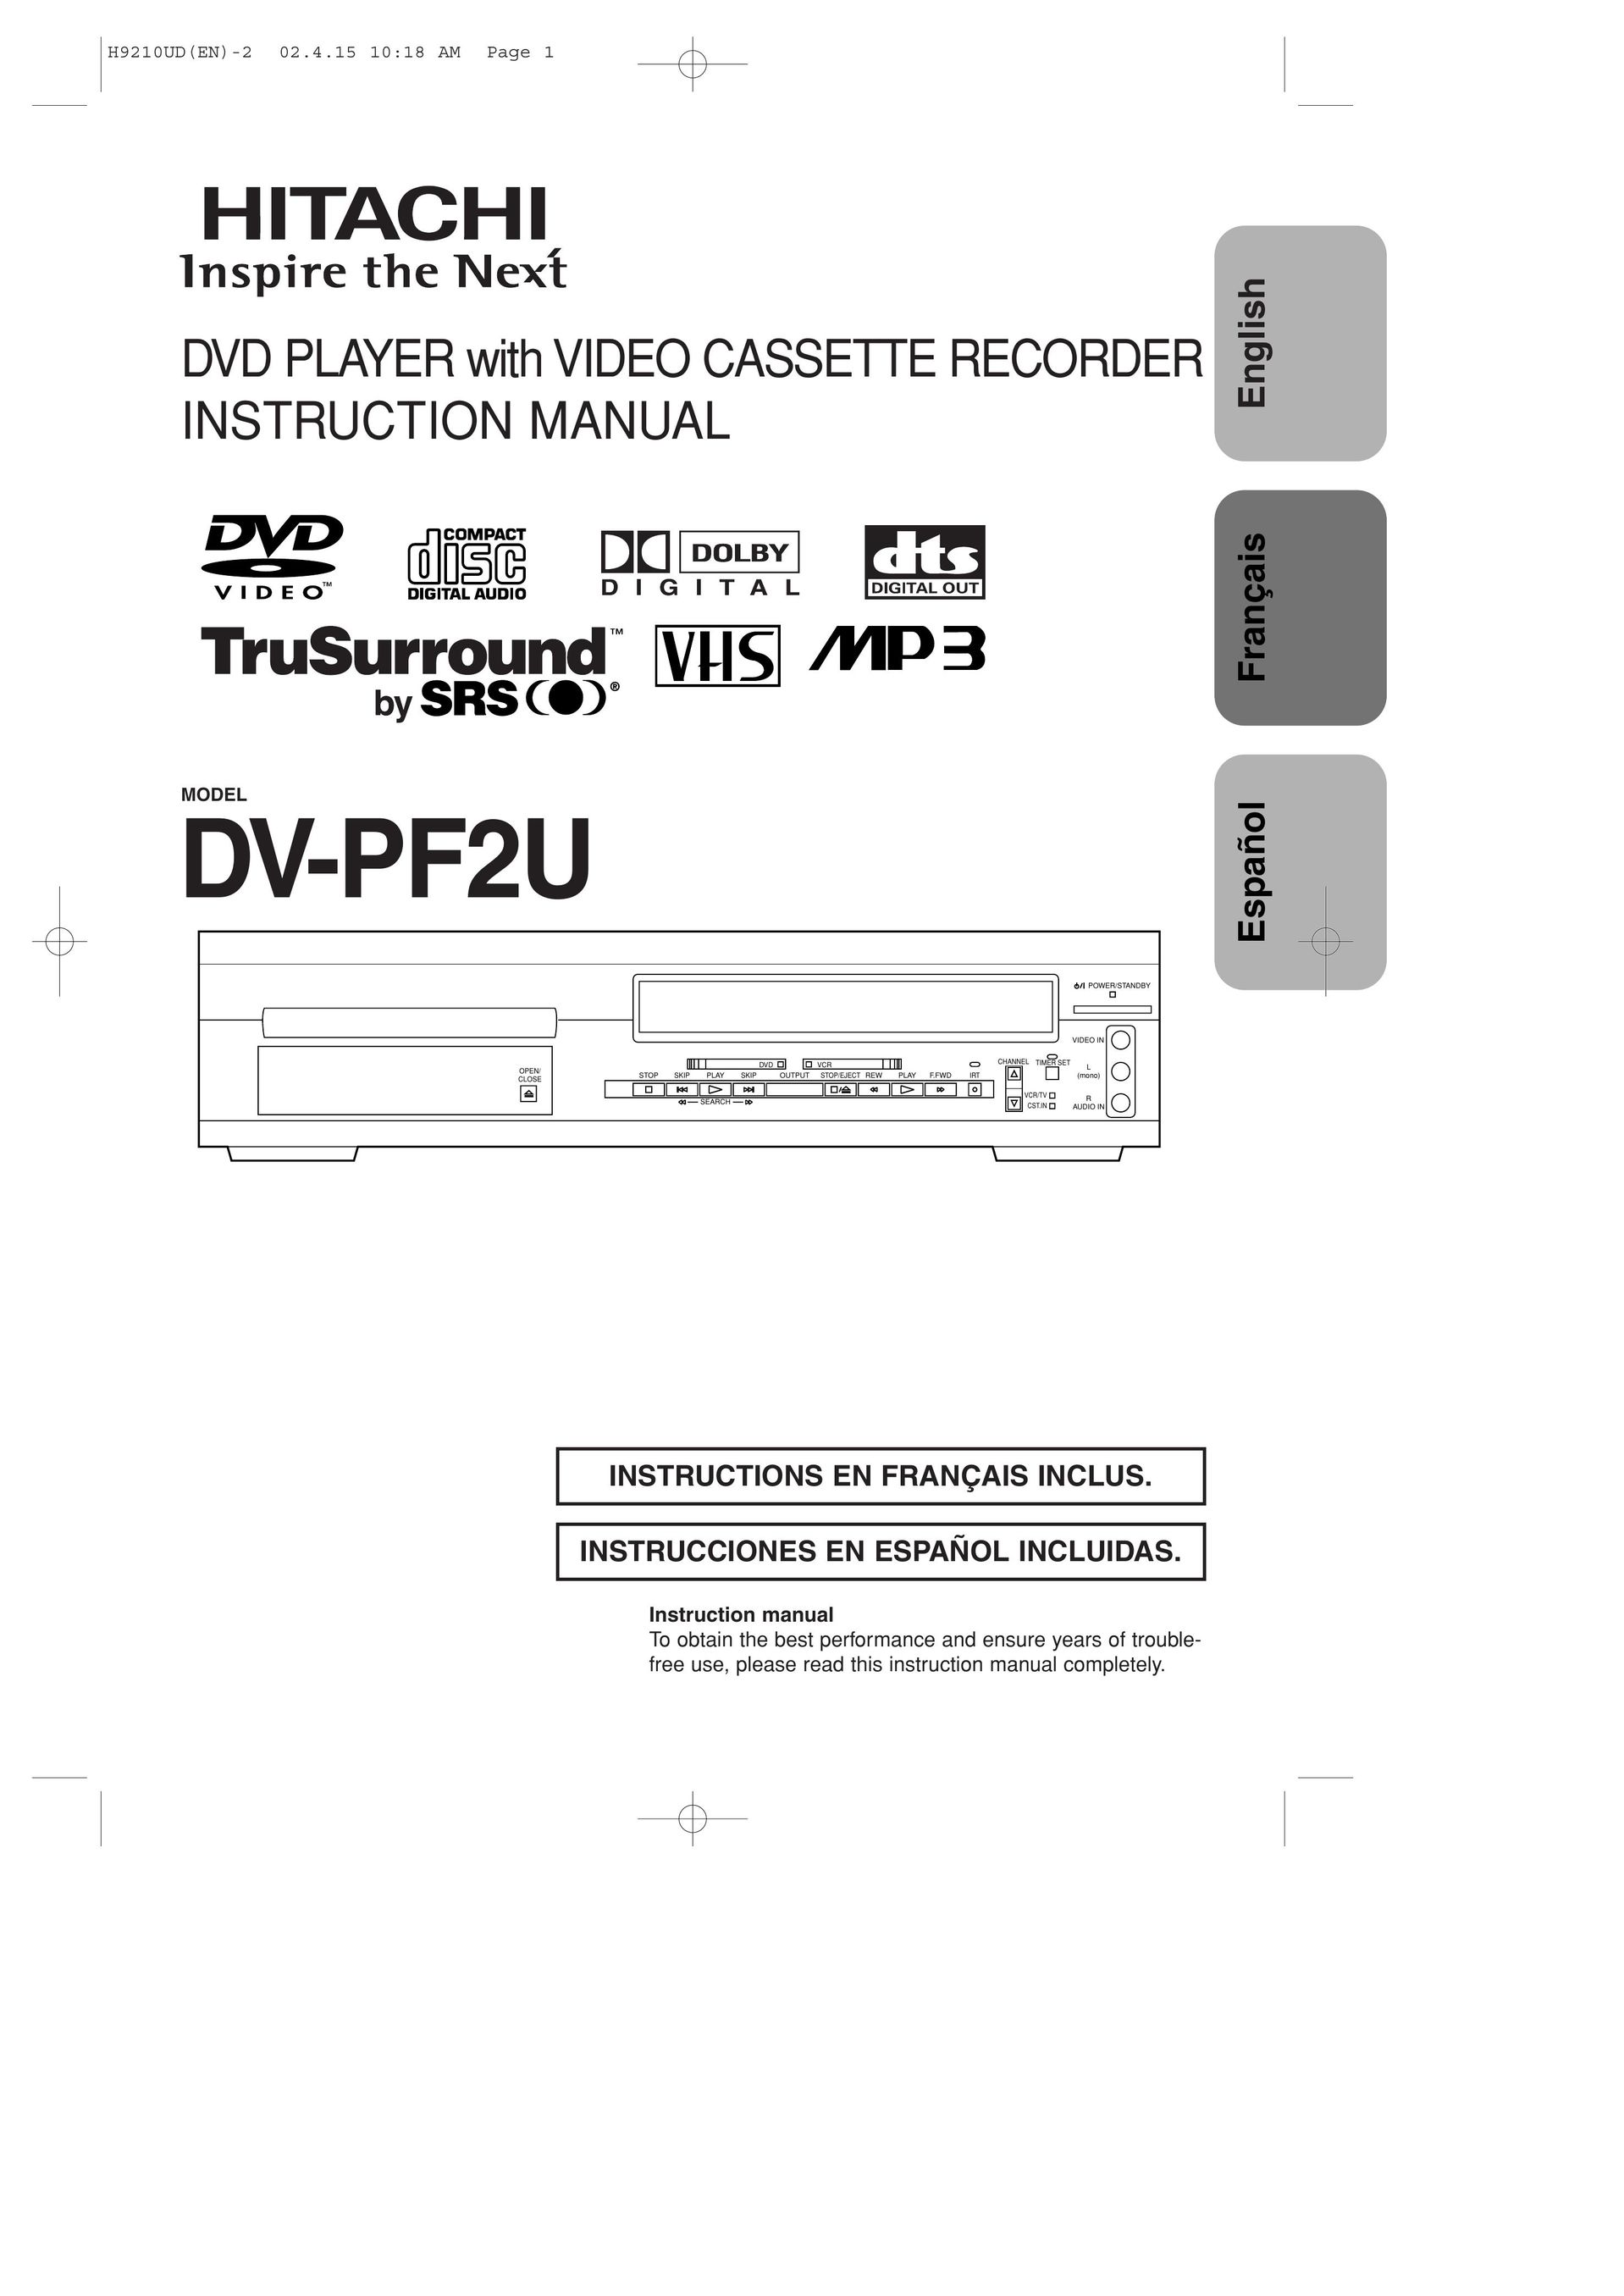 Hitachi DV-PF2U Portable DVD Player User Manual